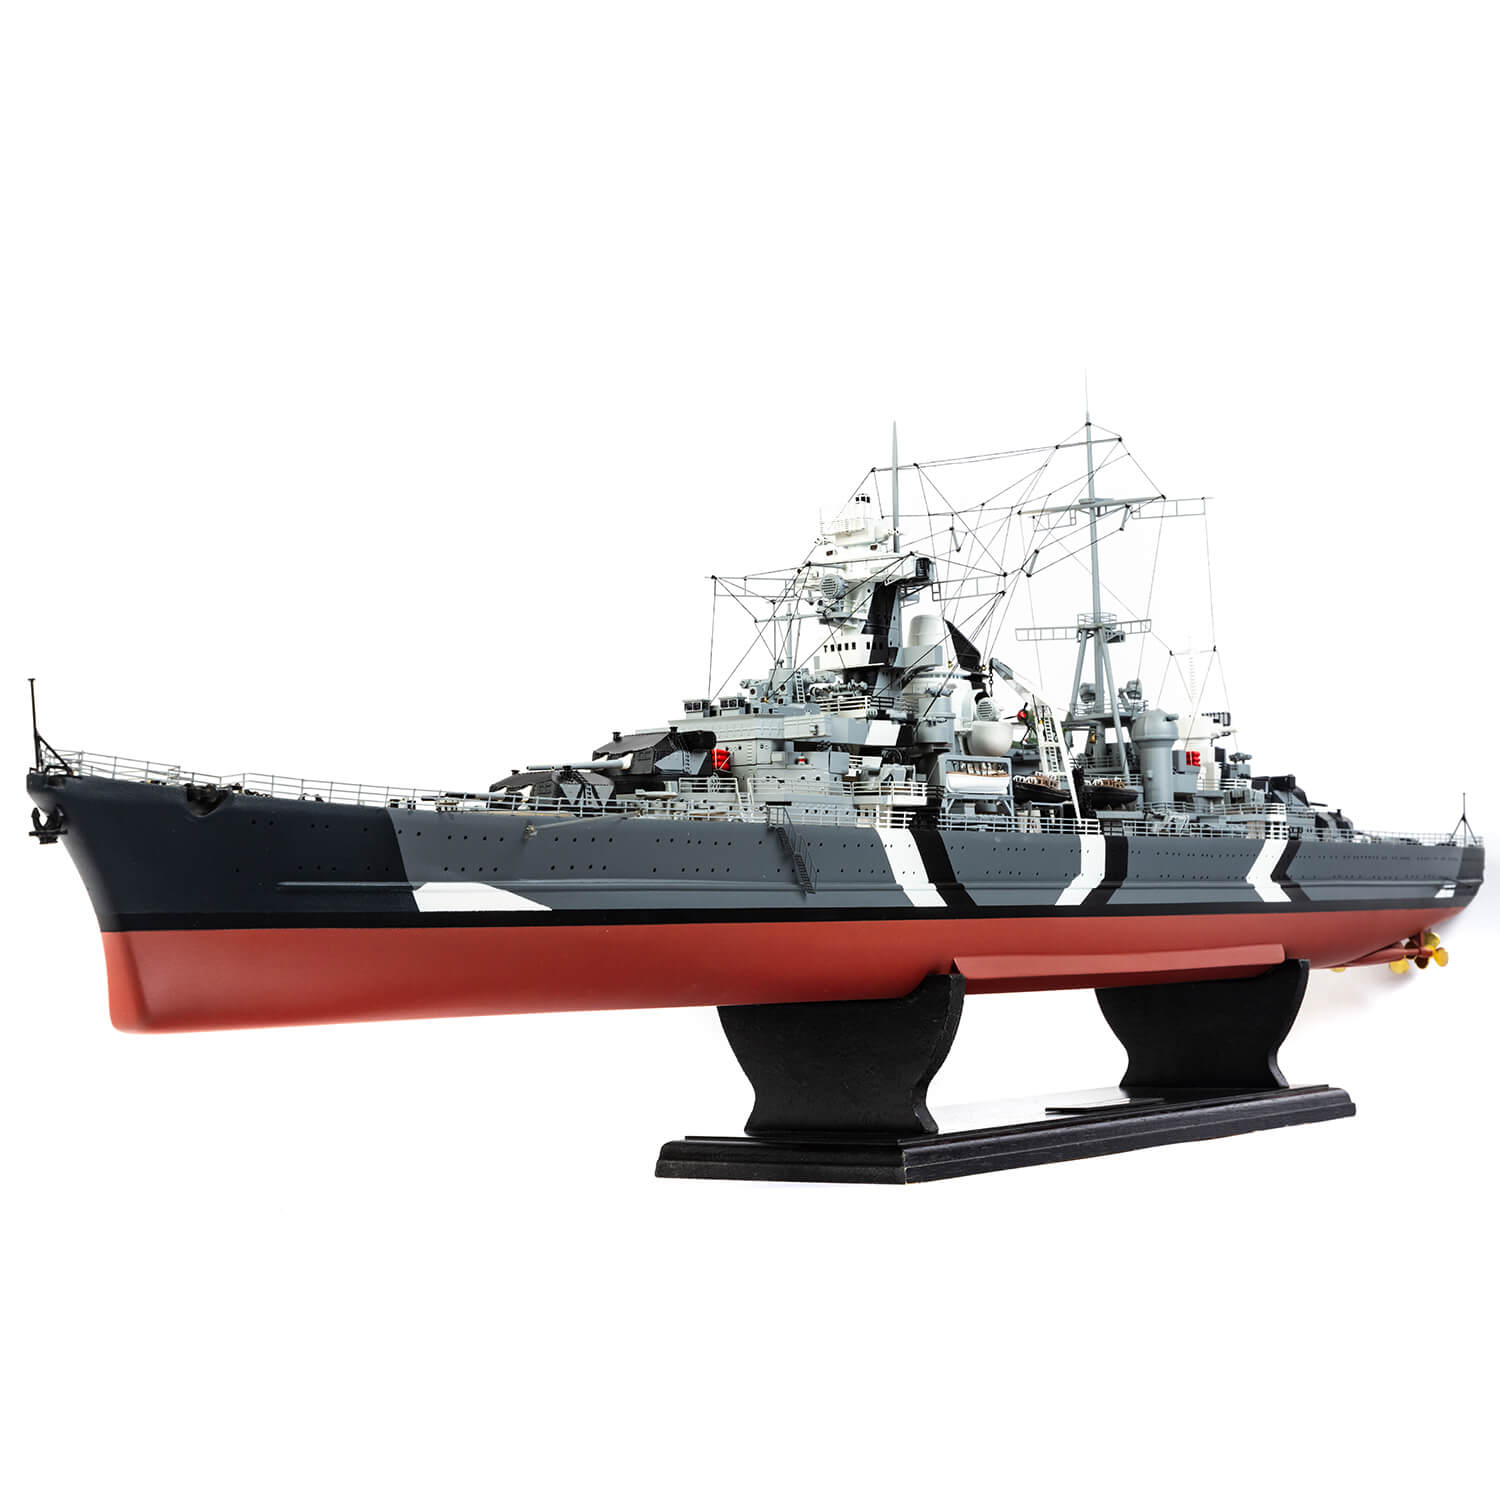 OcCre Prinz Eugen houten scheepsmodel 1:200